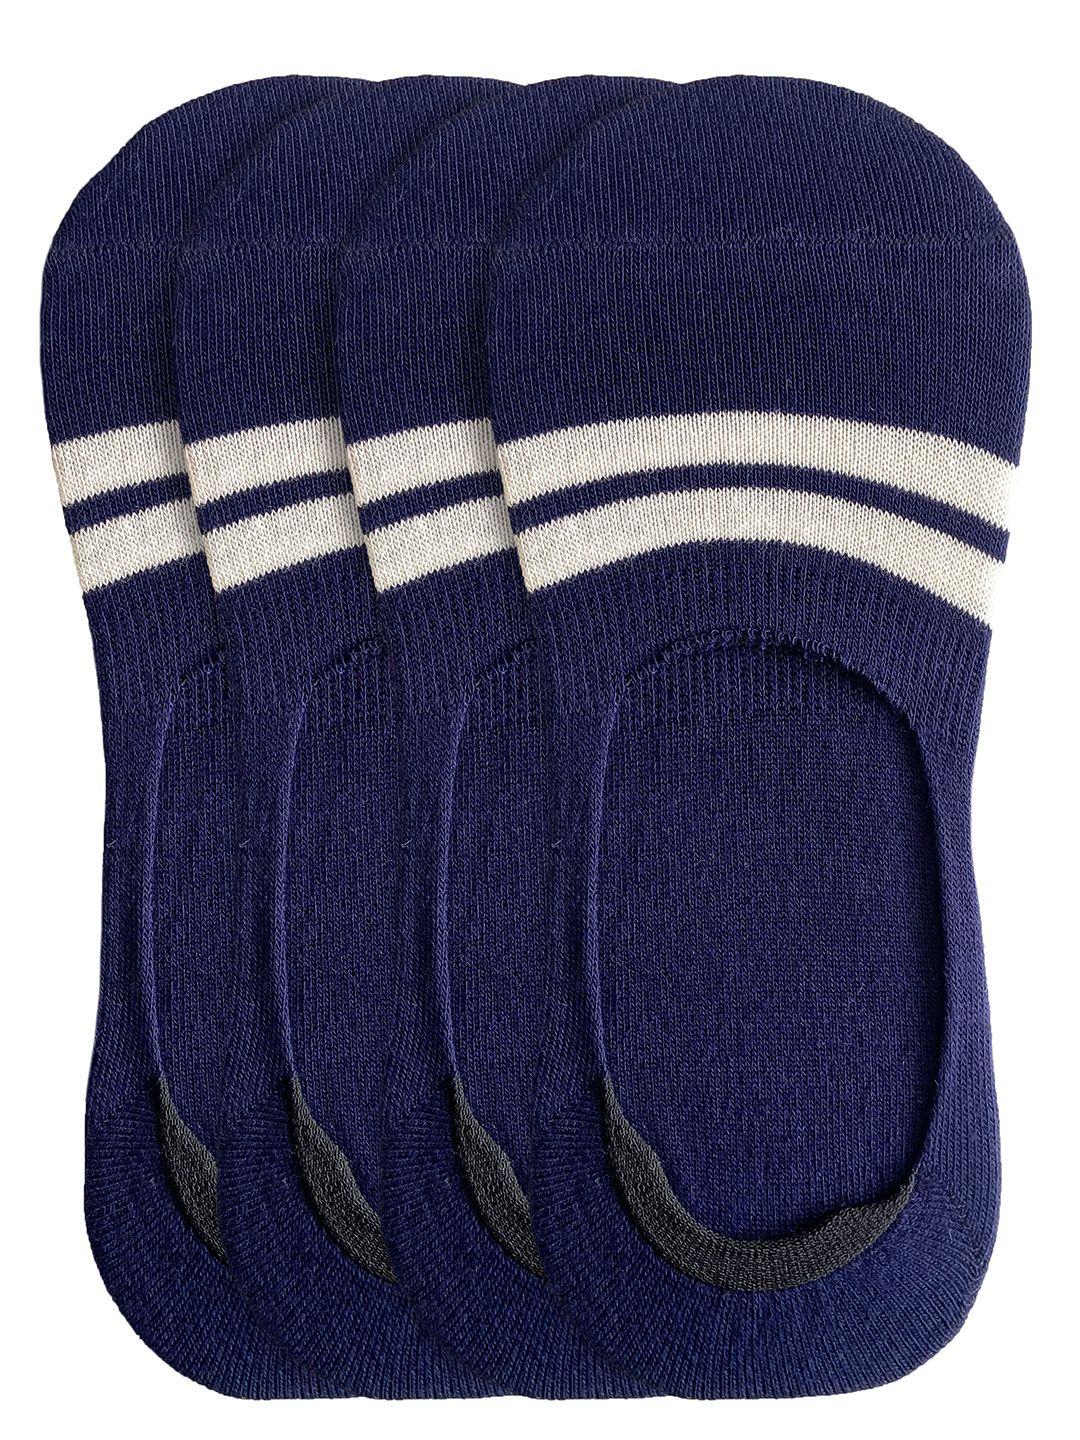 heelium navy blue pack of 4 striped shoe liners